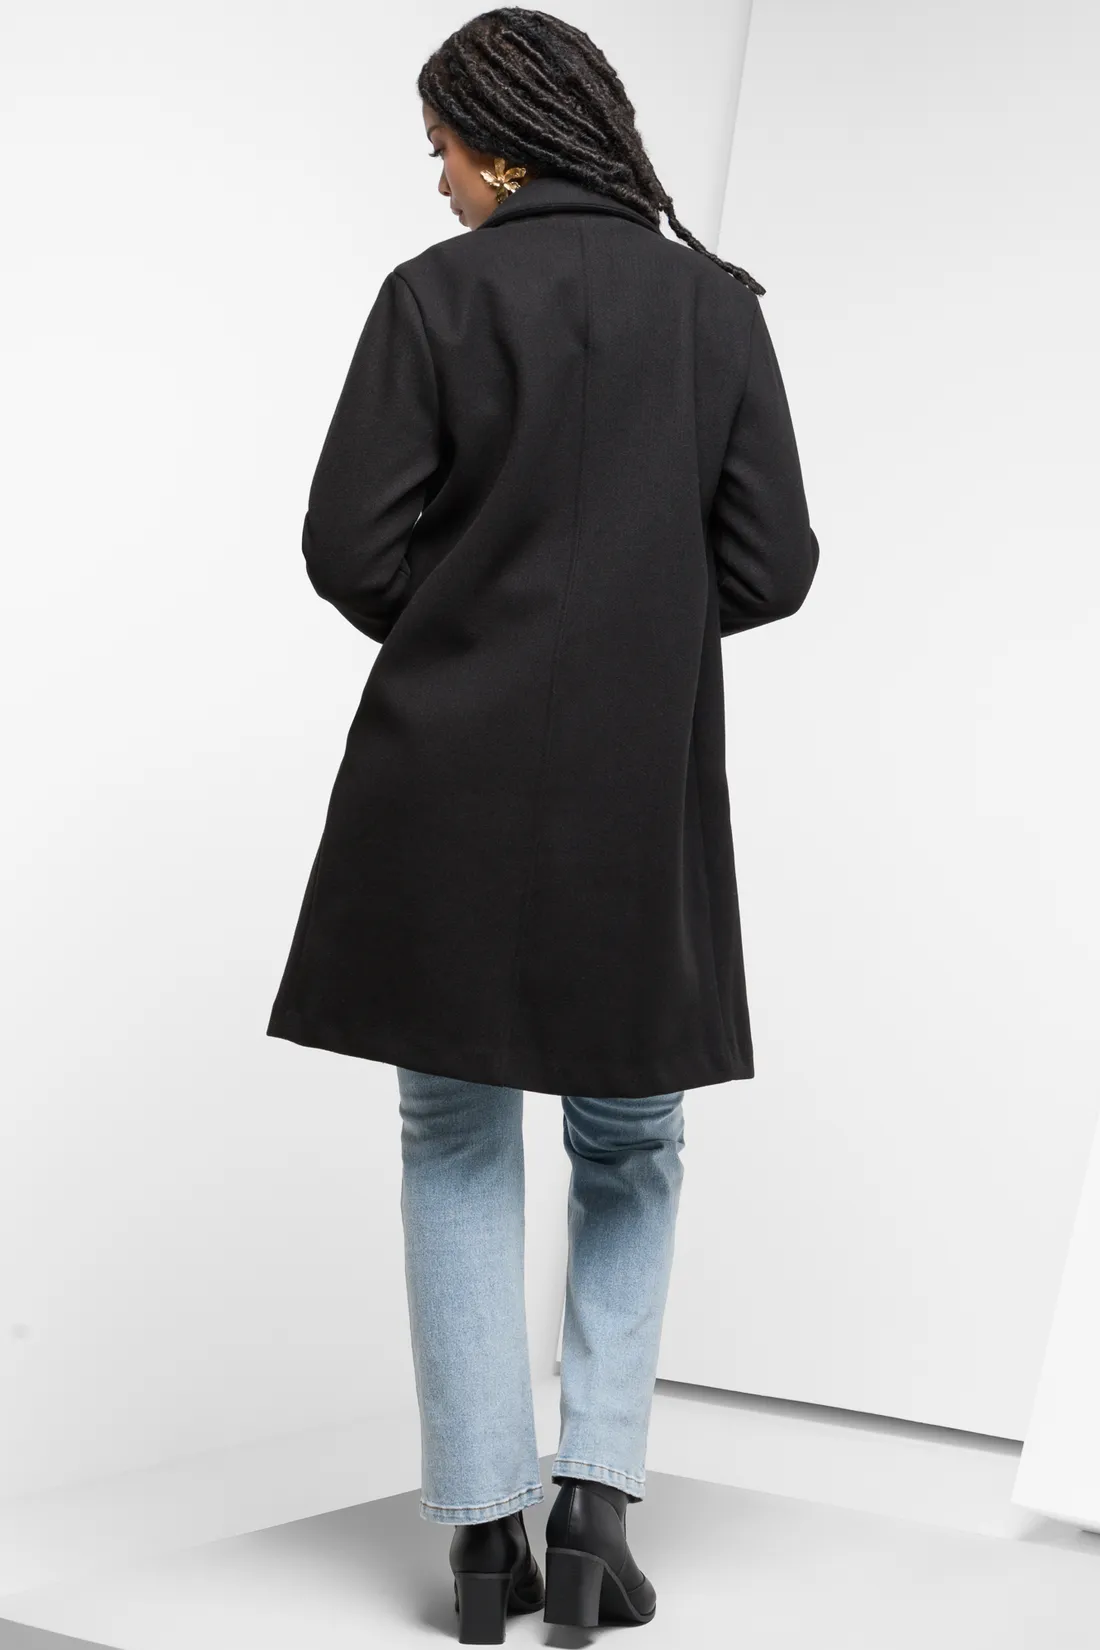 Melton coat black - Women's Coats | Ackermans